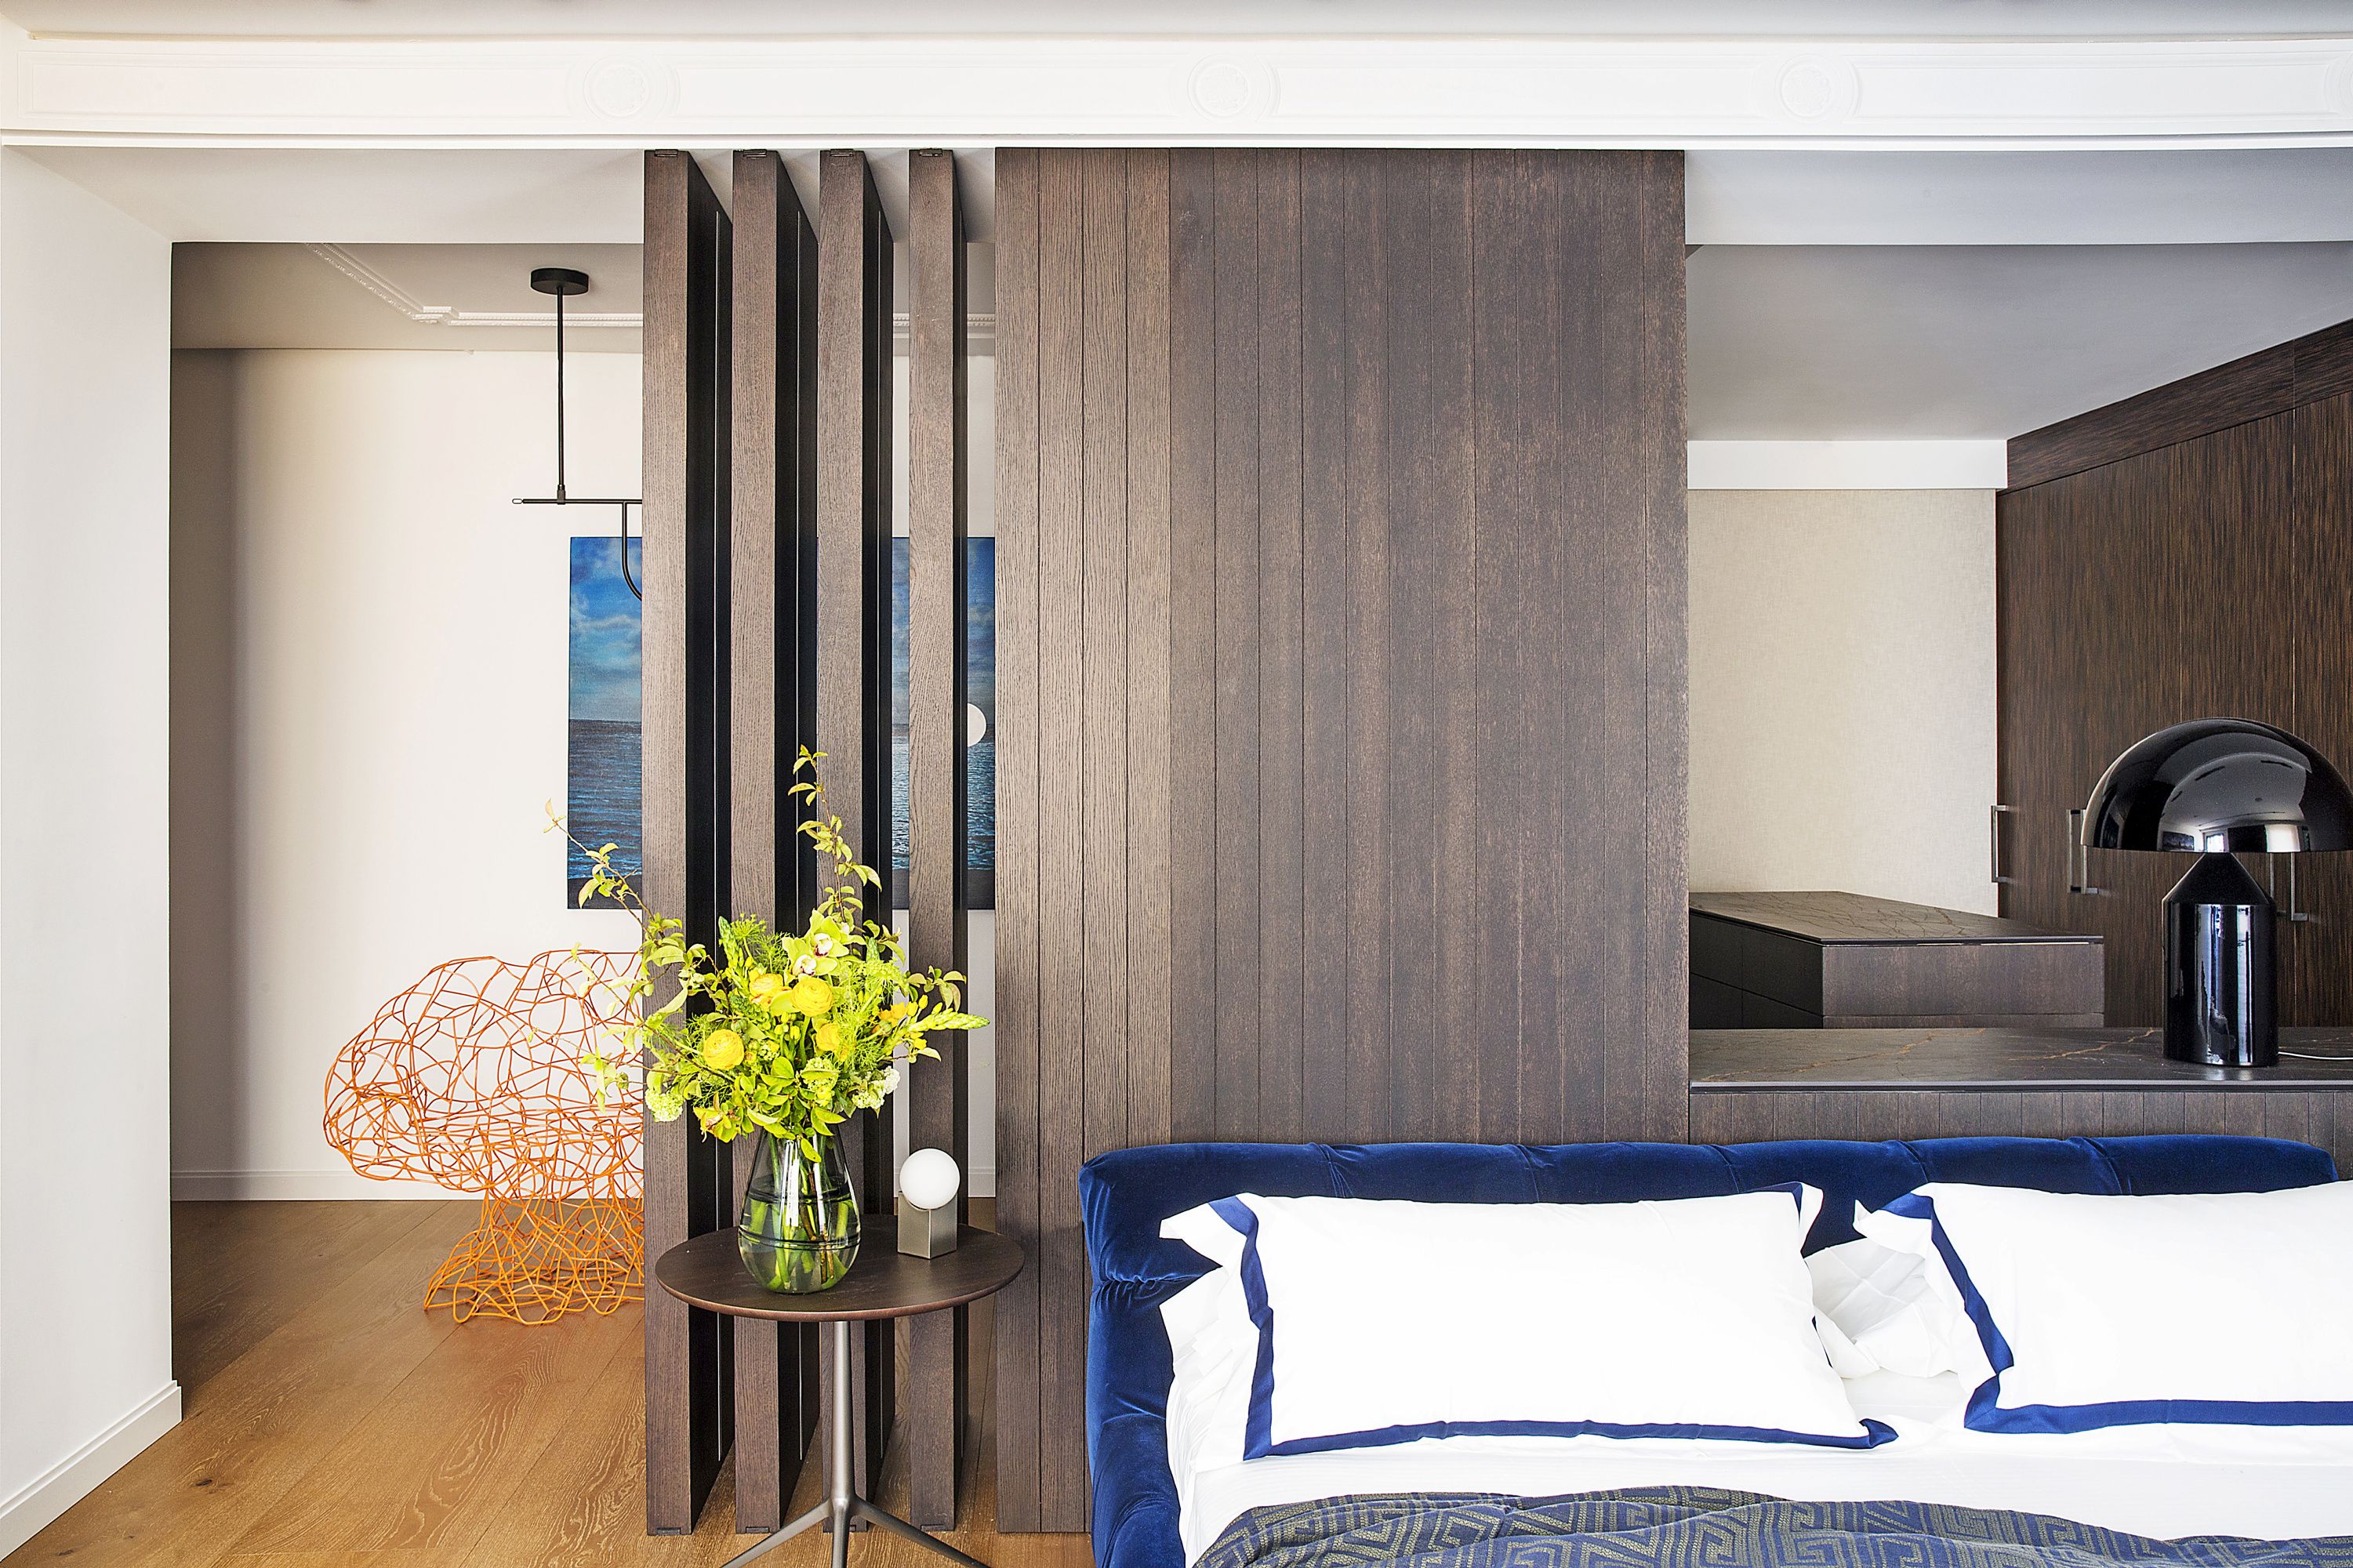 70 ideas para dormitorios modernos: consejos de decoración